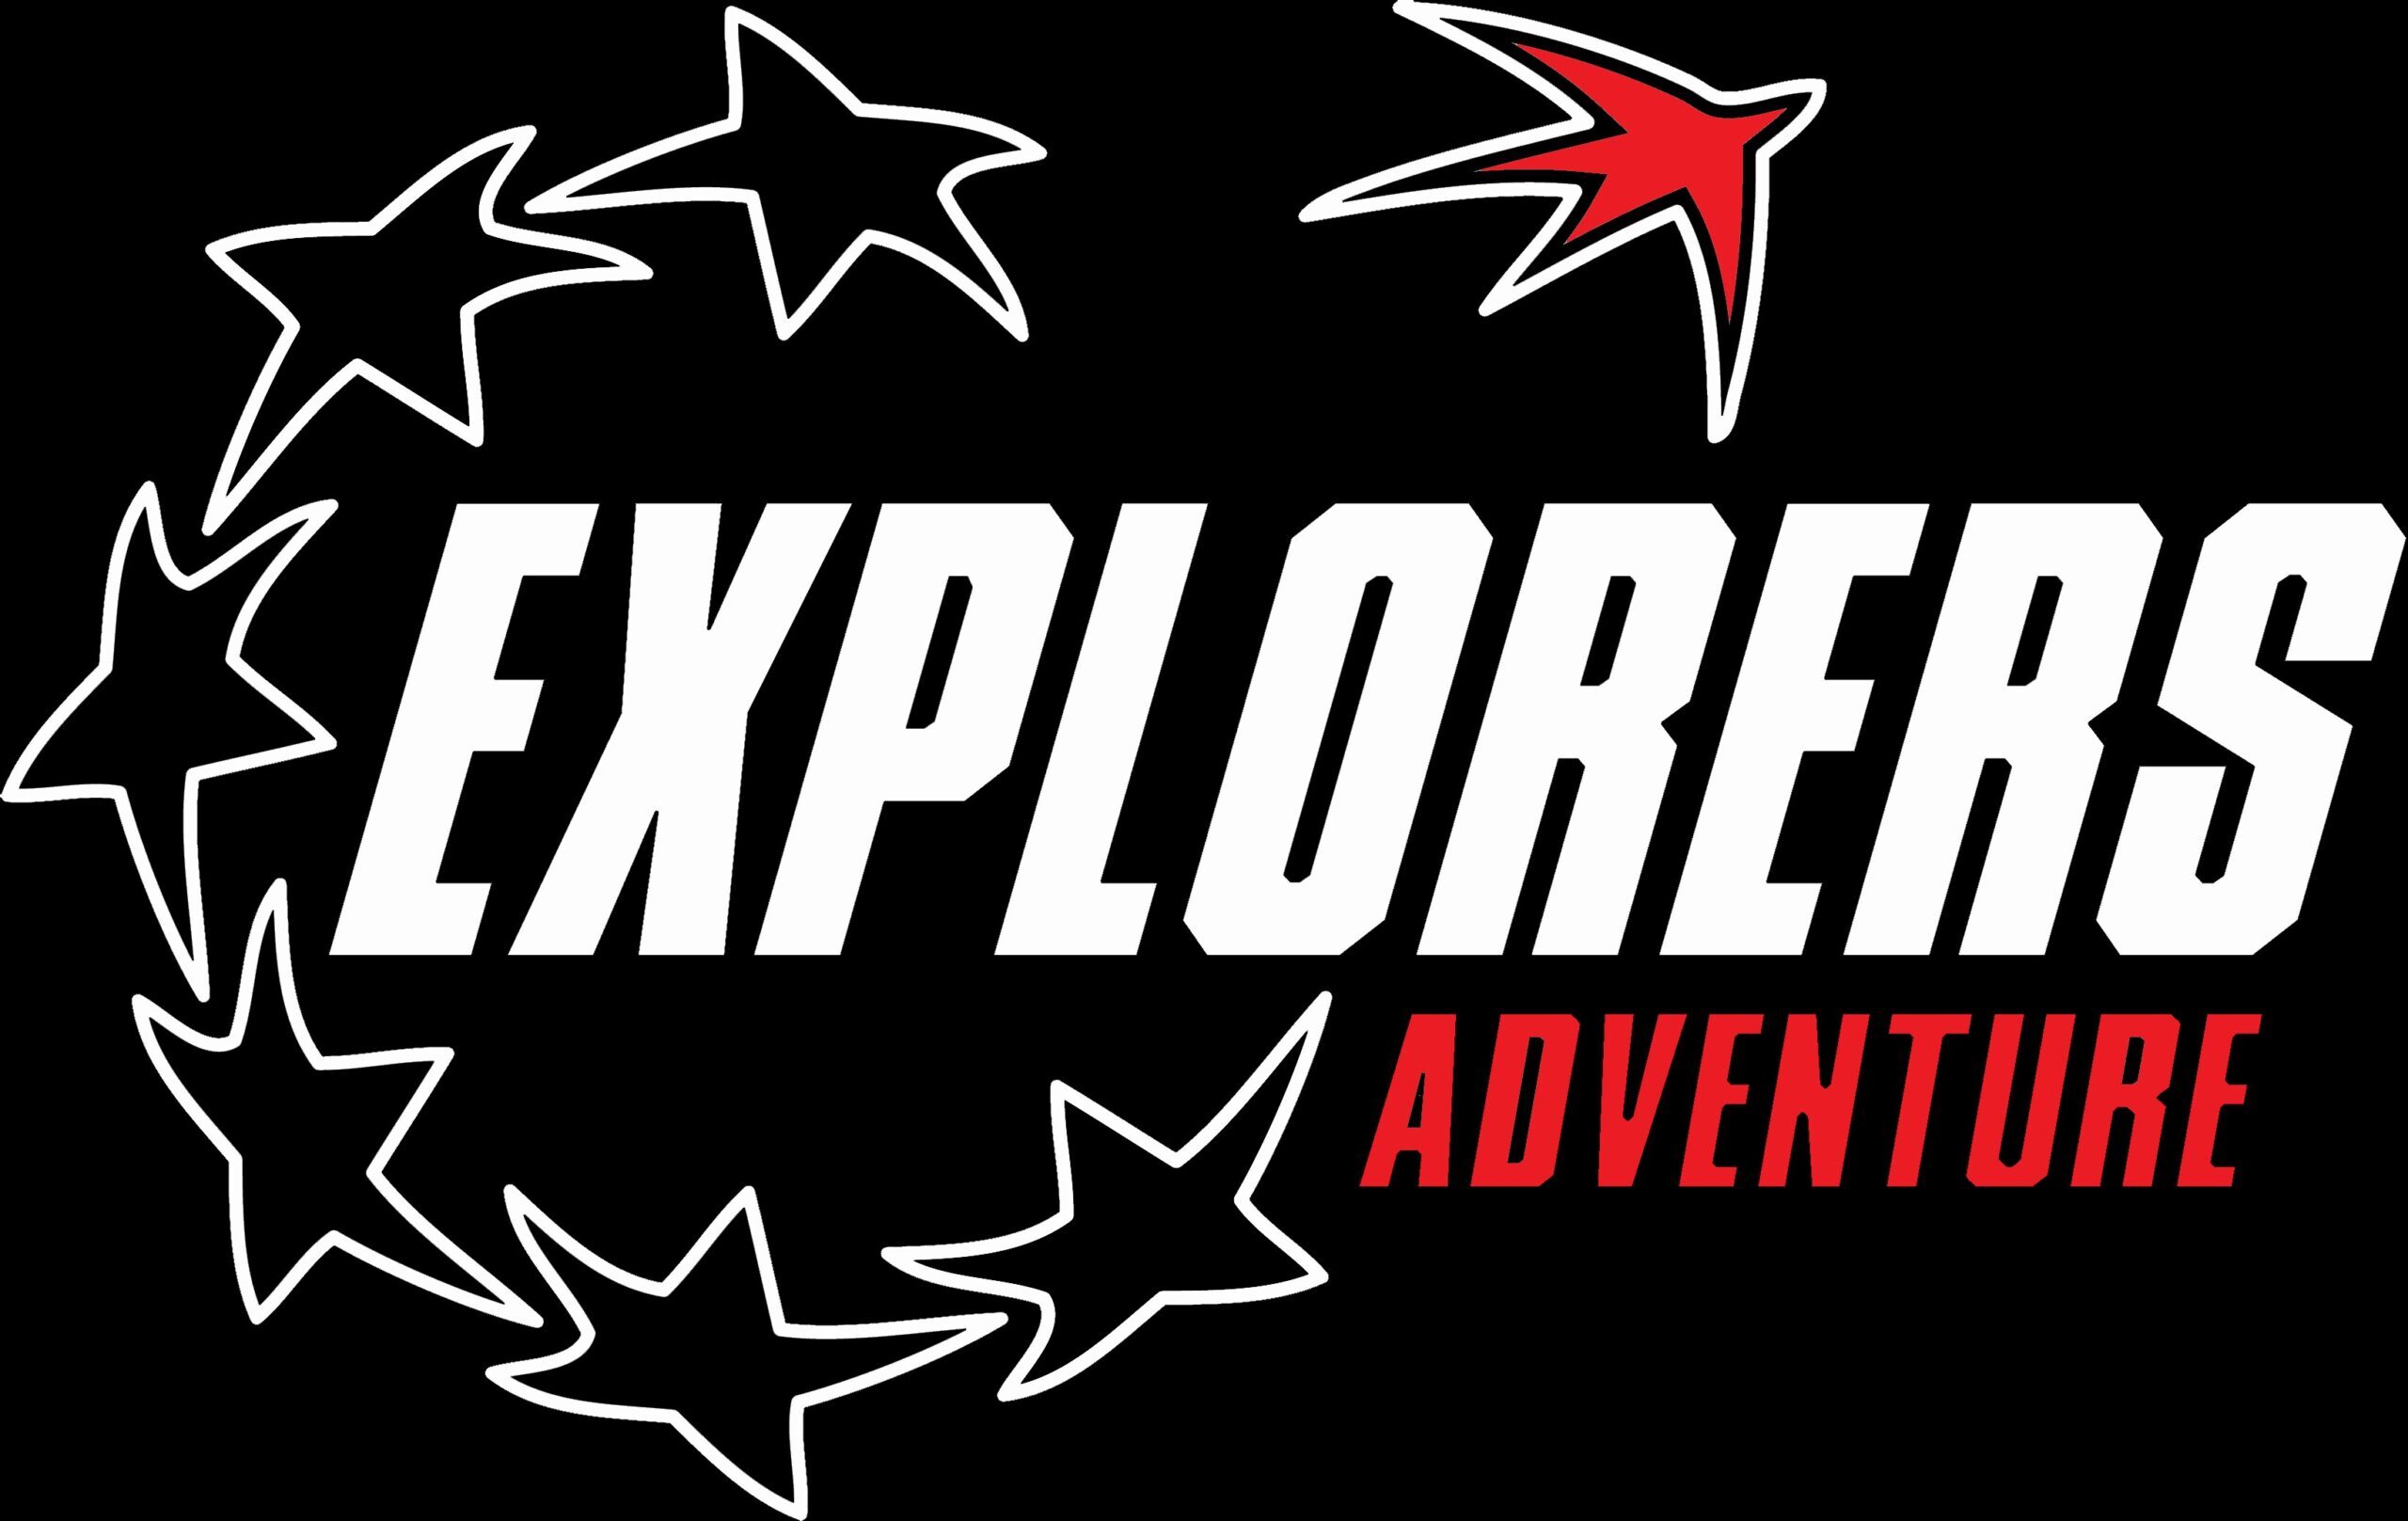 EXPLORERS adventure | Adventure Travel - Avanturistička putovanja